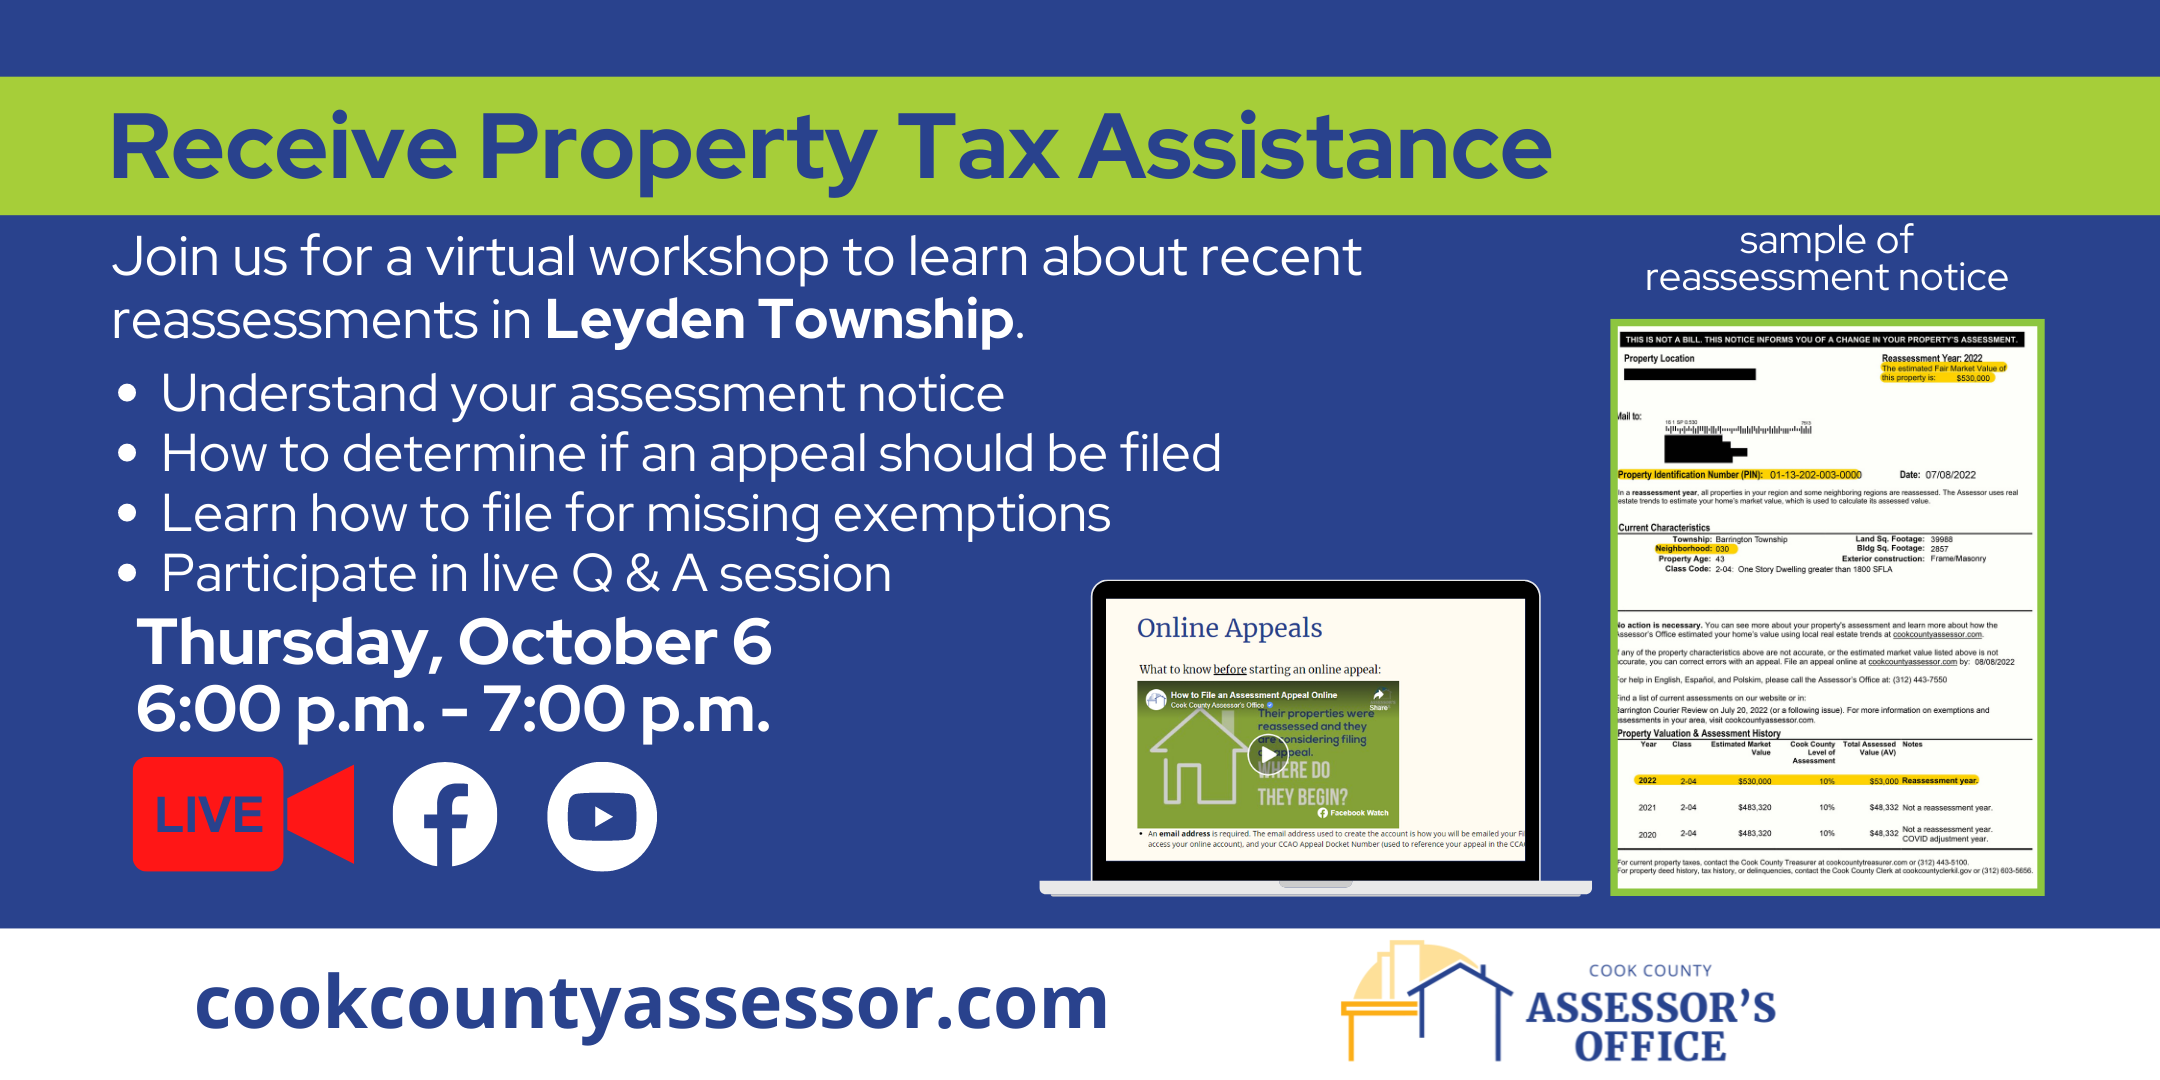 Receive Property tax assistance leyden township virtual webinar Thursday October 6